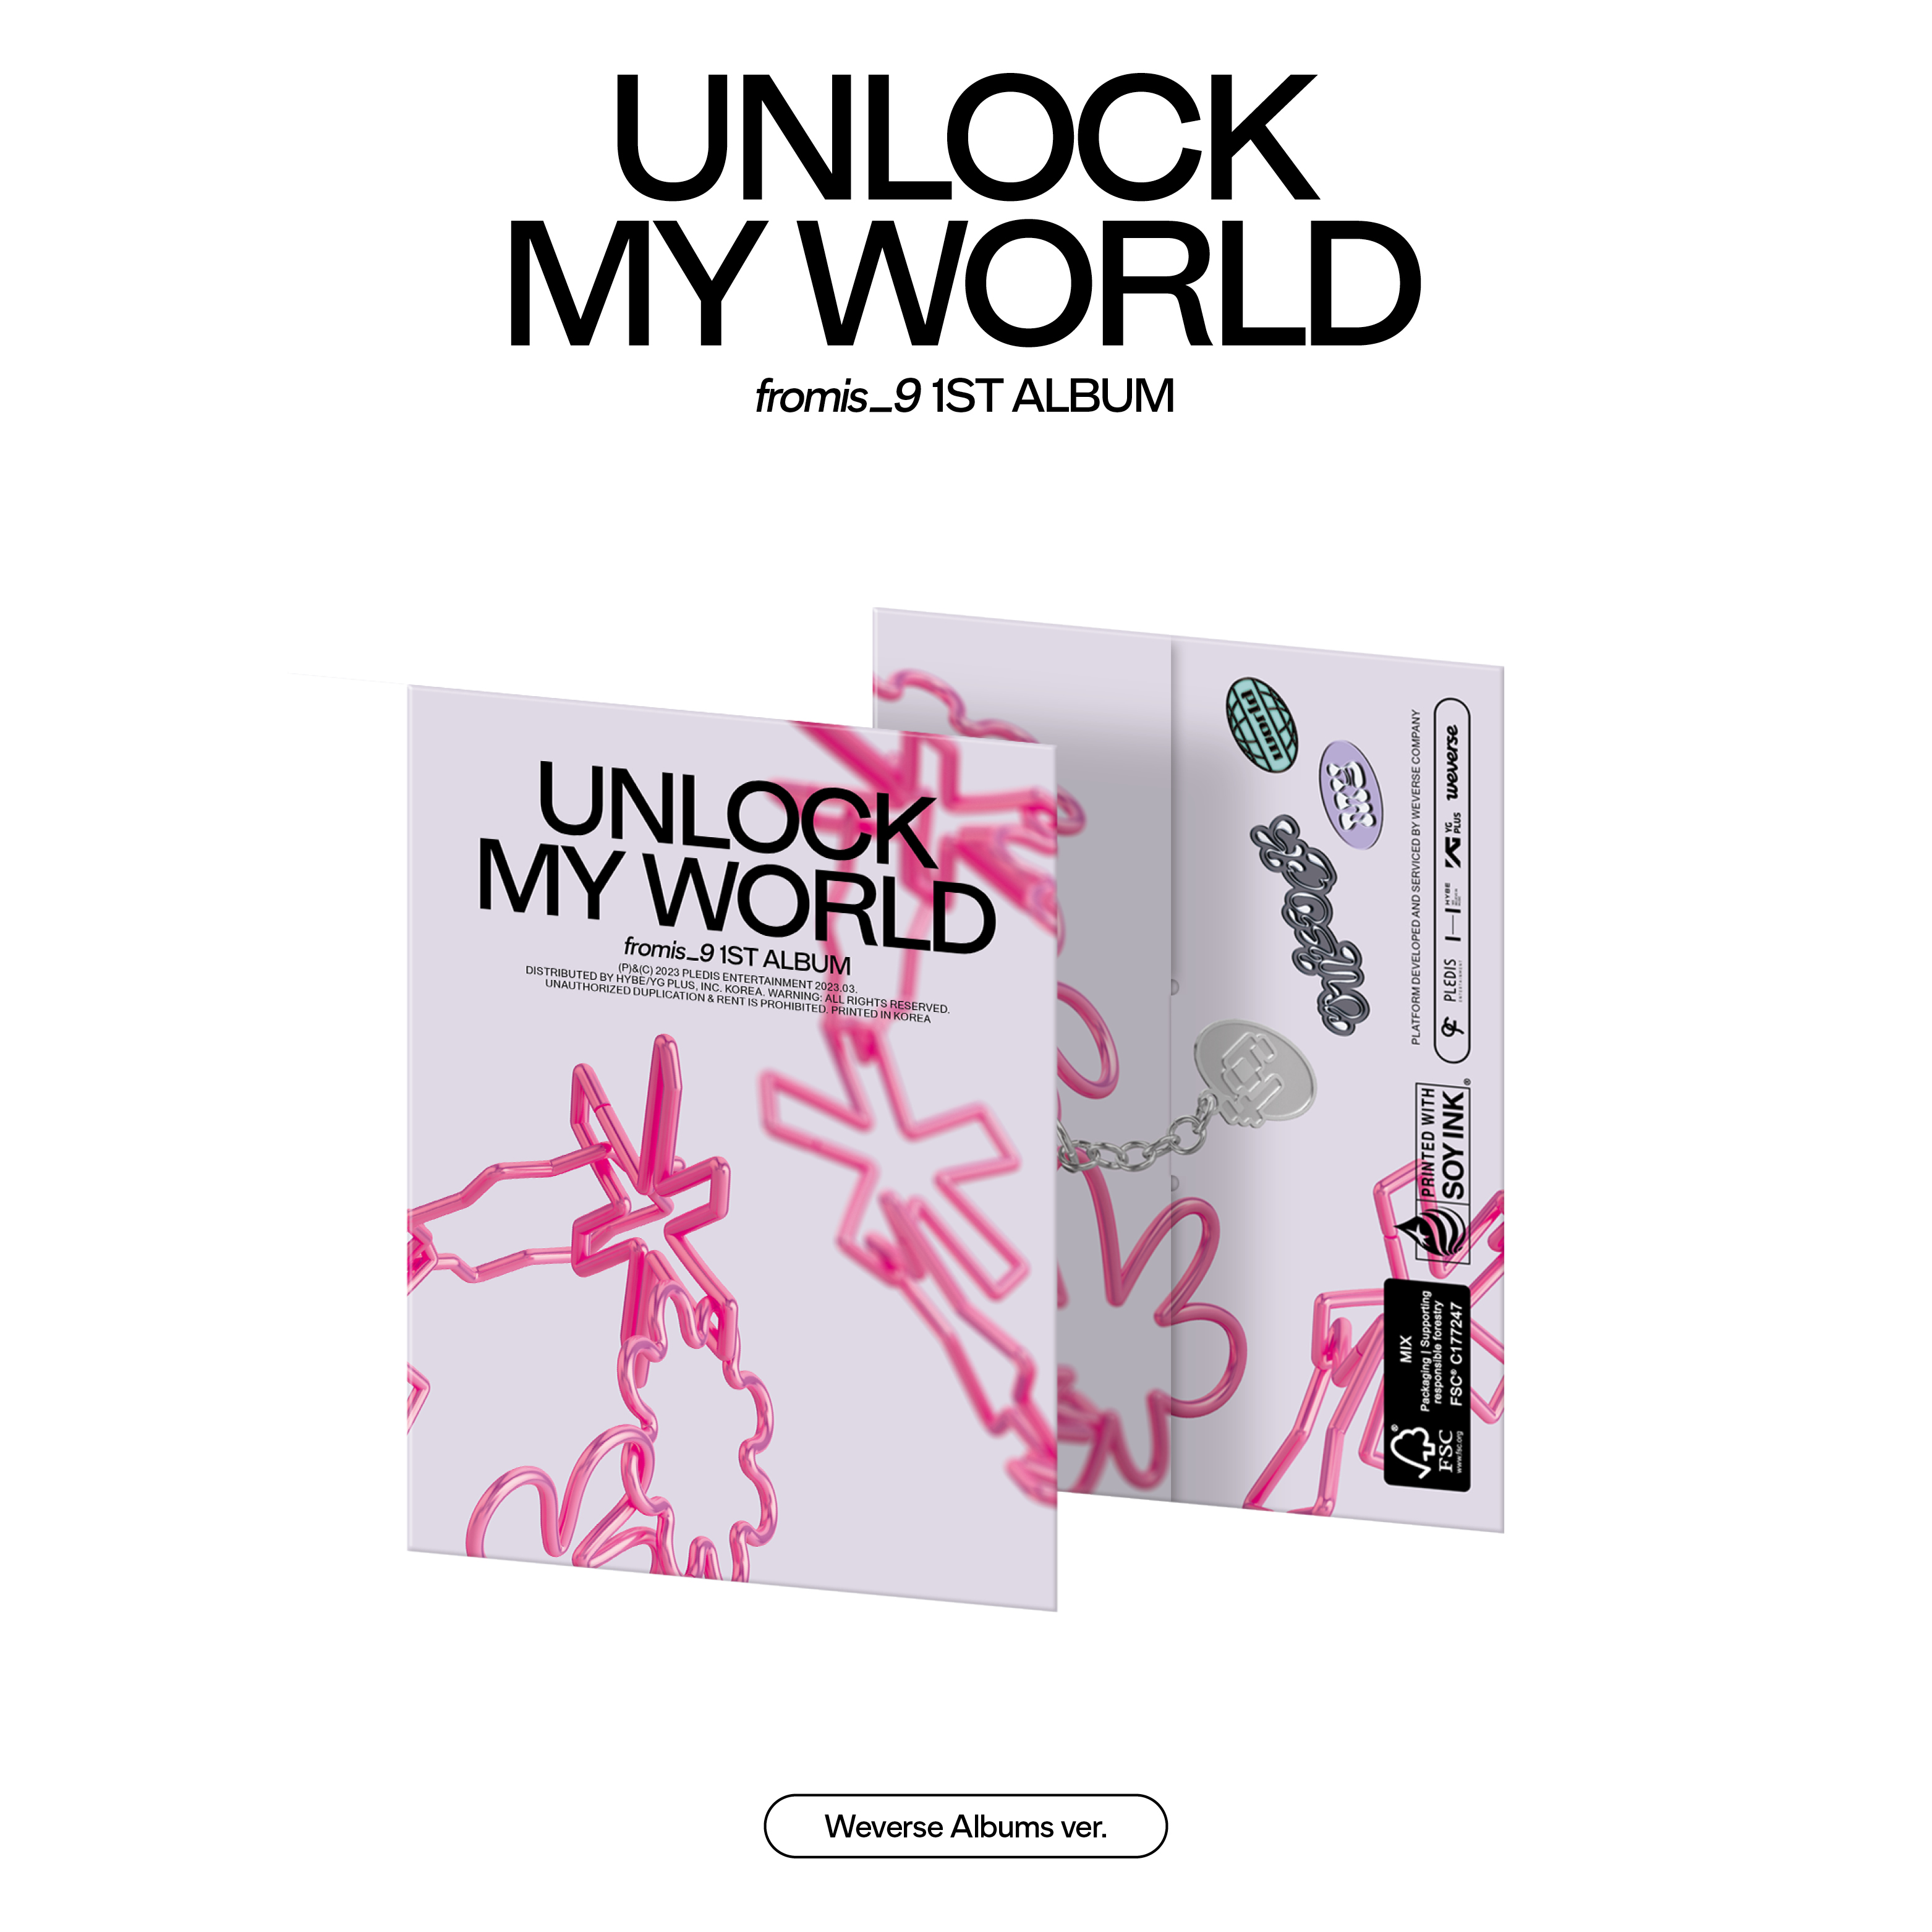 [全款 裸专][Ktown4u Special Gift] [8CD 套装] fromis_9 - 1st Album [Unlock My World] (Weverse Albums ver.) _九站联合